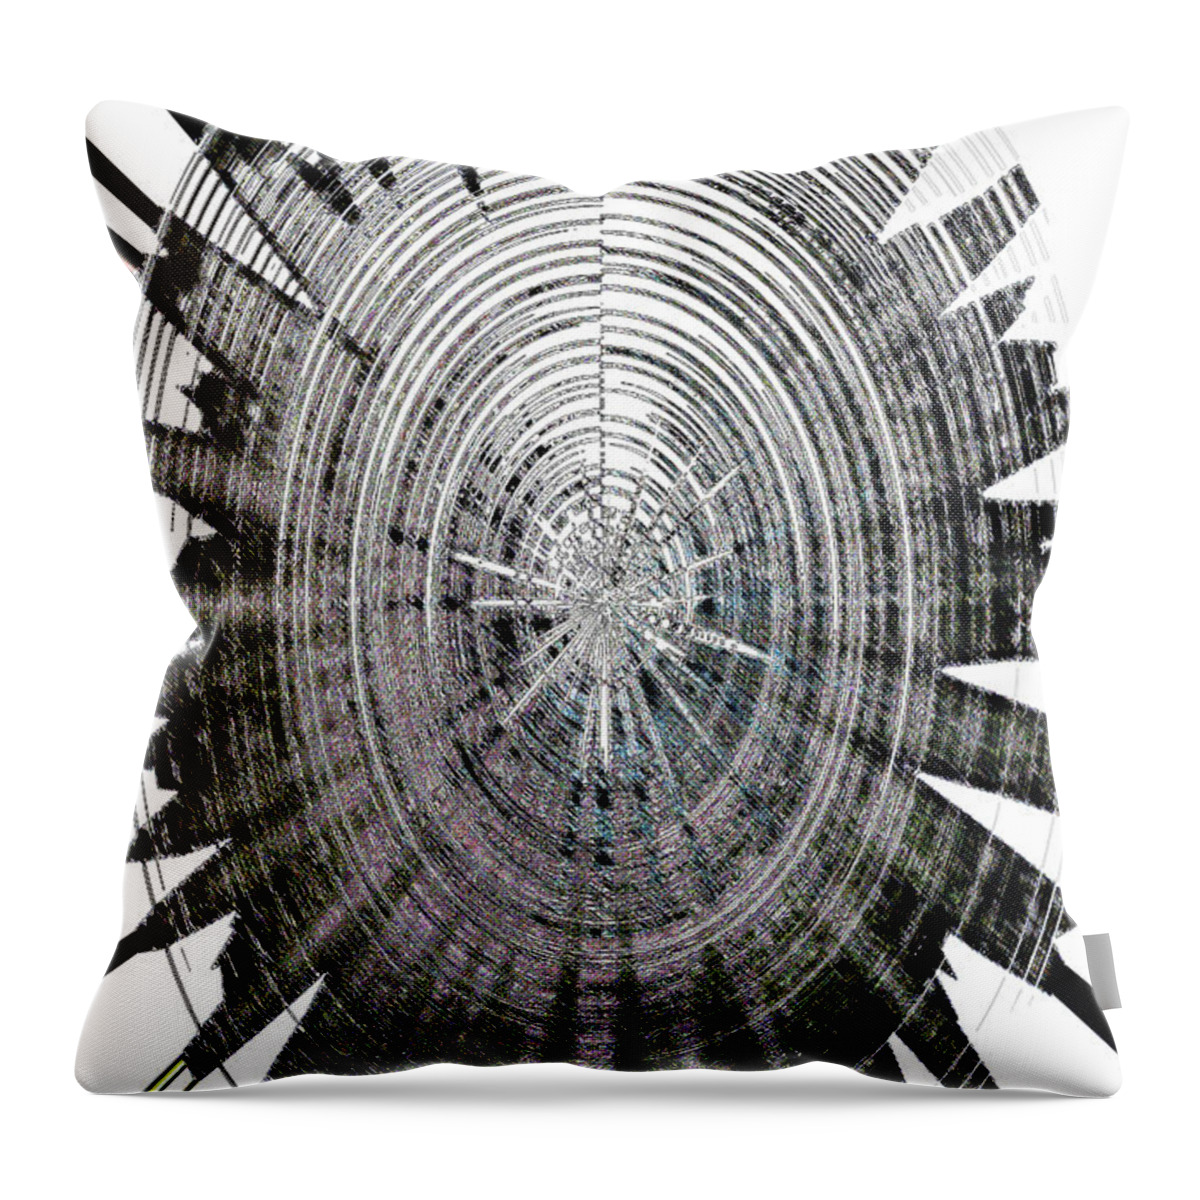 Digital Splat Throw Pillow featuring the digital art Digital Splat by Tom Janca